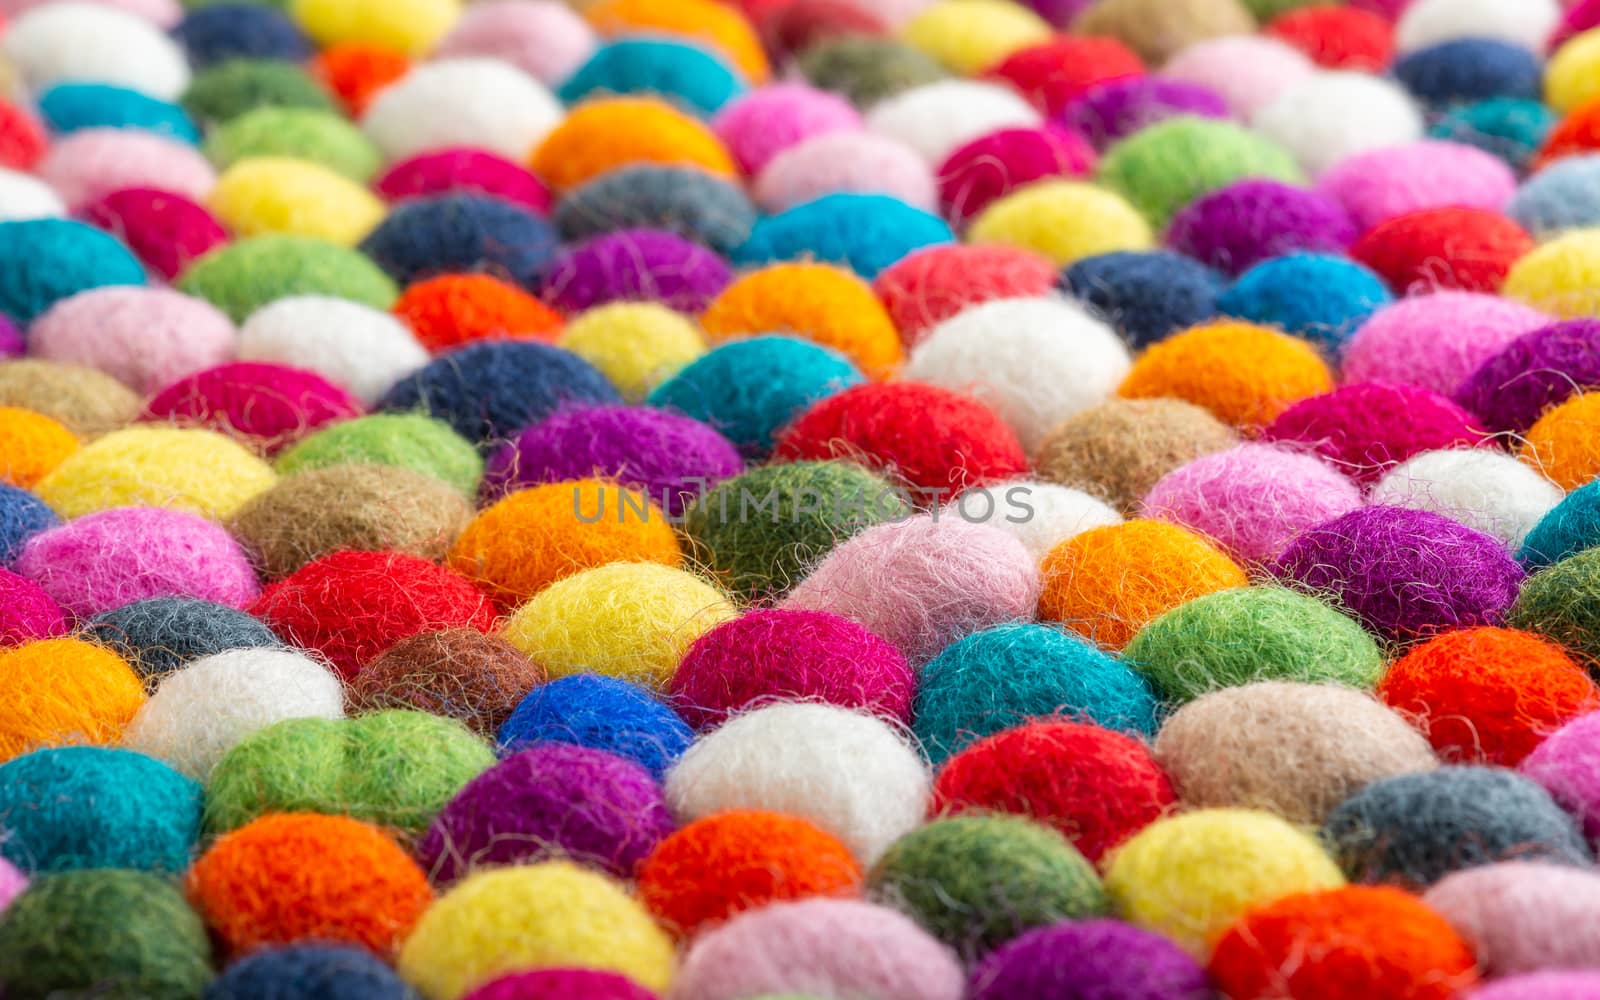 Multicolored felt ball rug detail by dutourdumonde